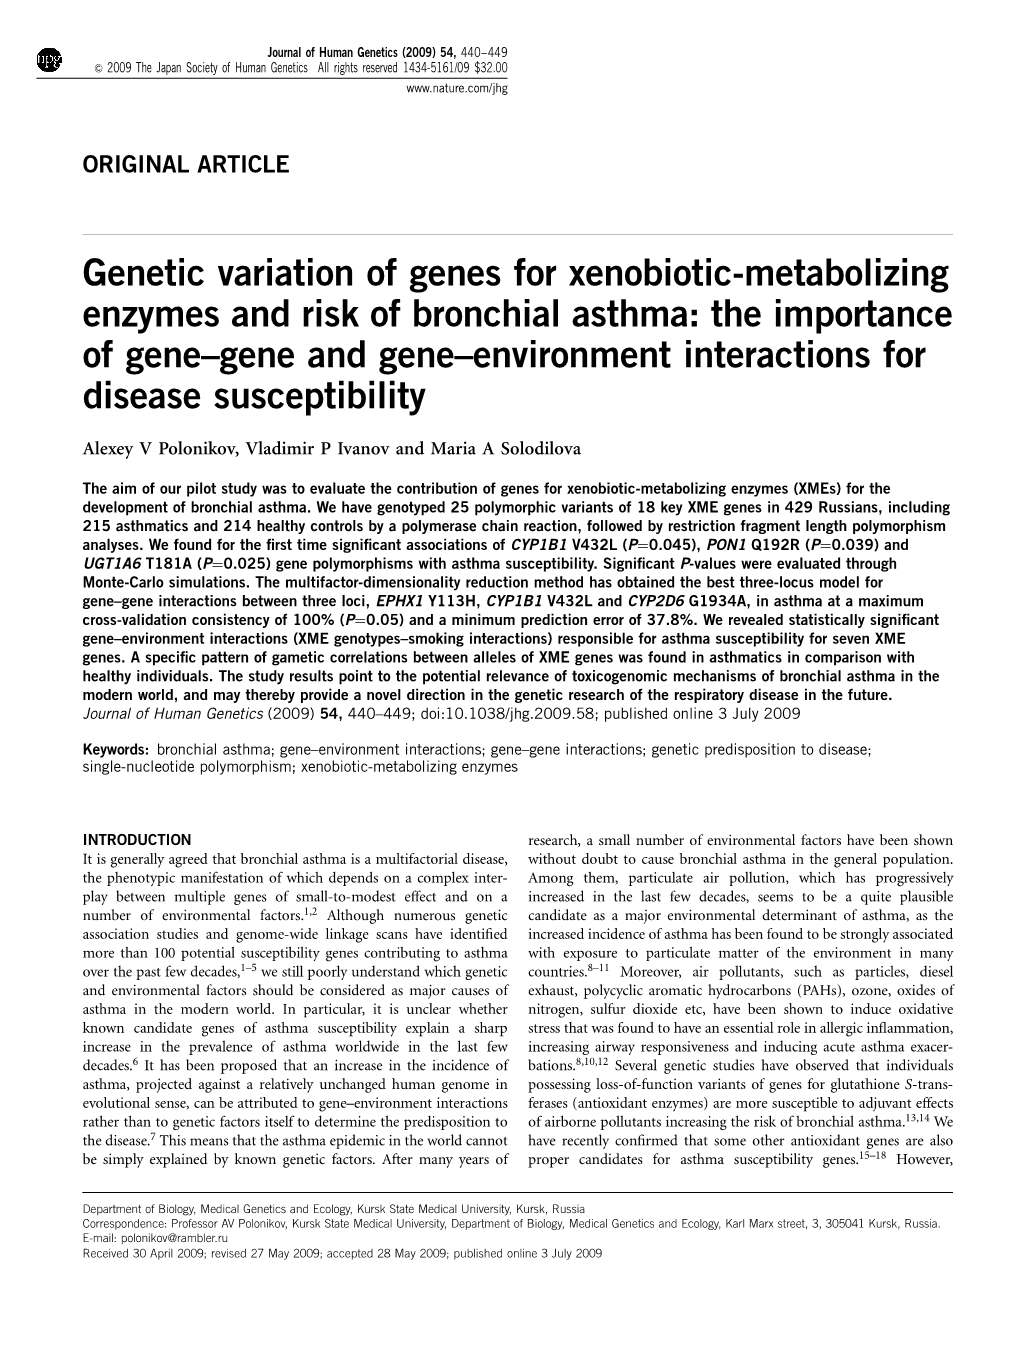 Genetic Variation of Genes for Xenobiotic-Metabolizing